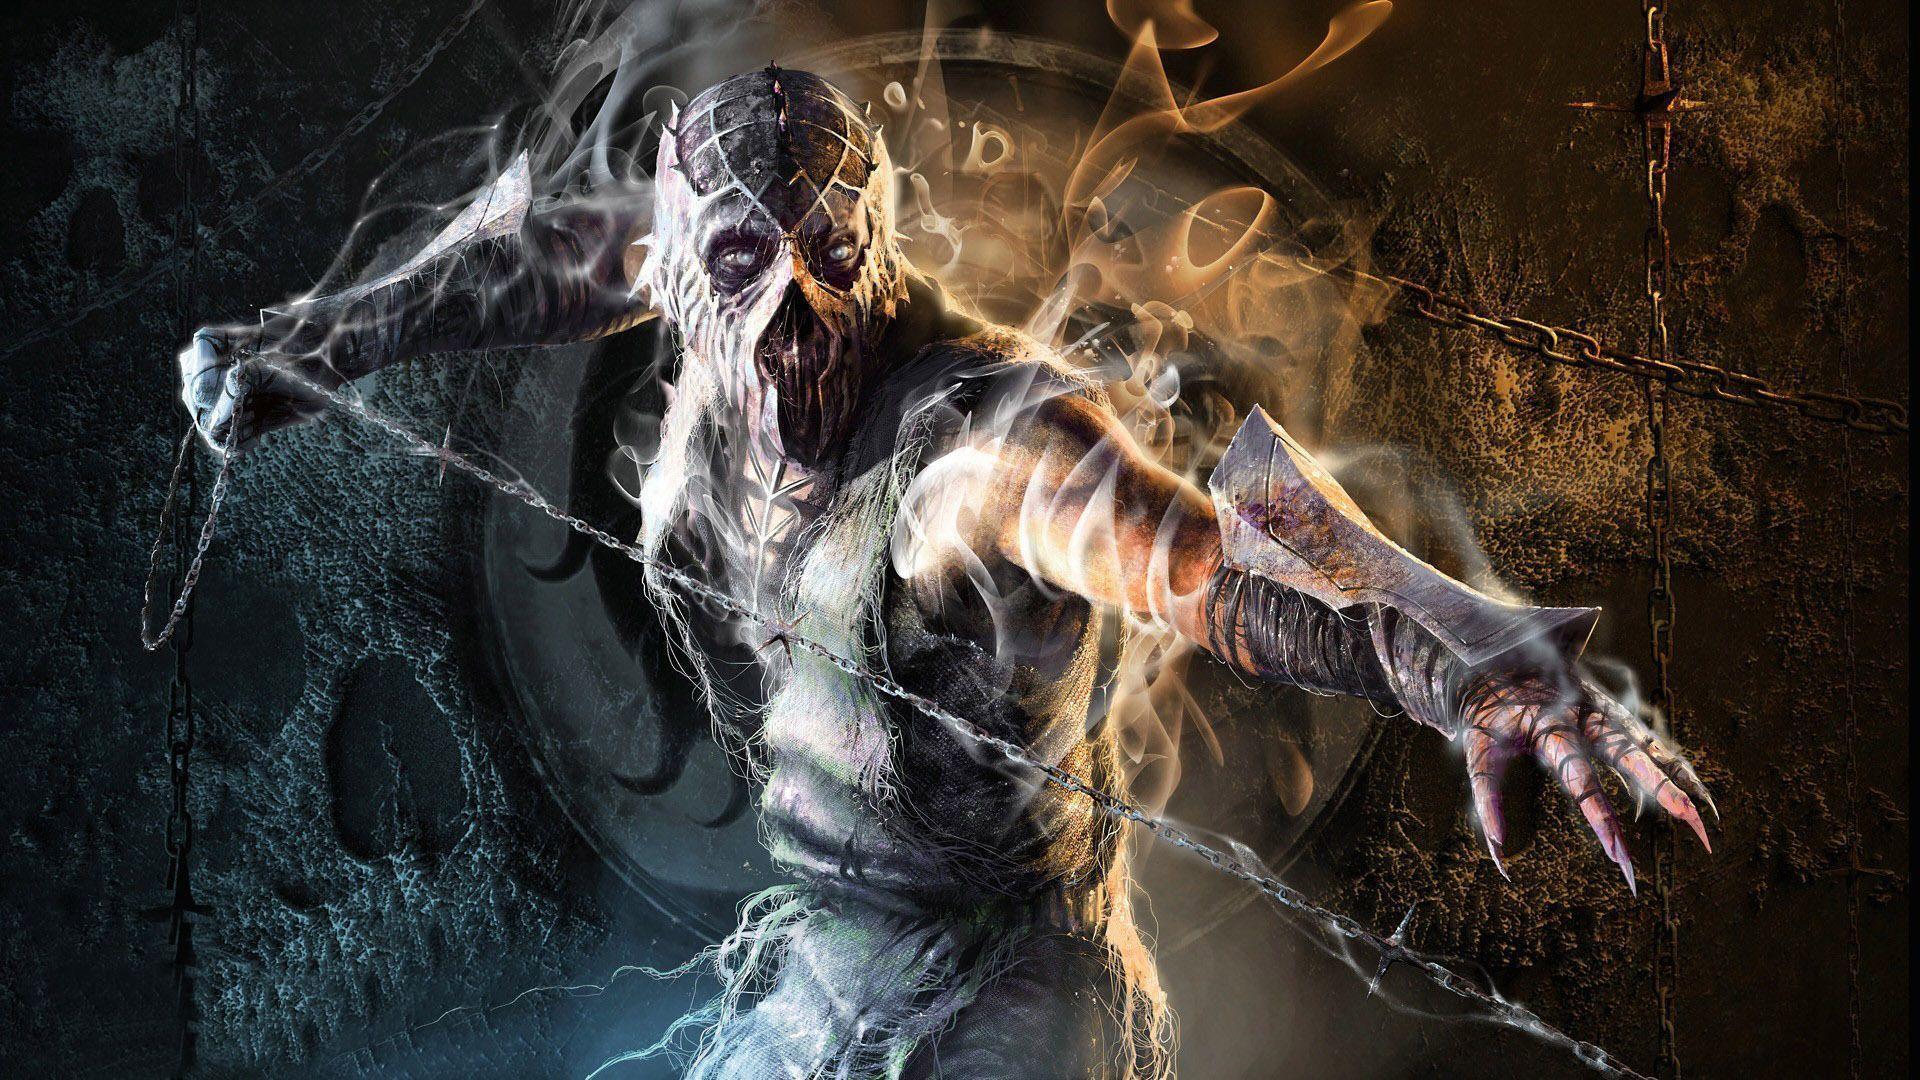 Mortal Kombat Scorpion wallpaper 70233